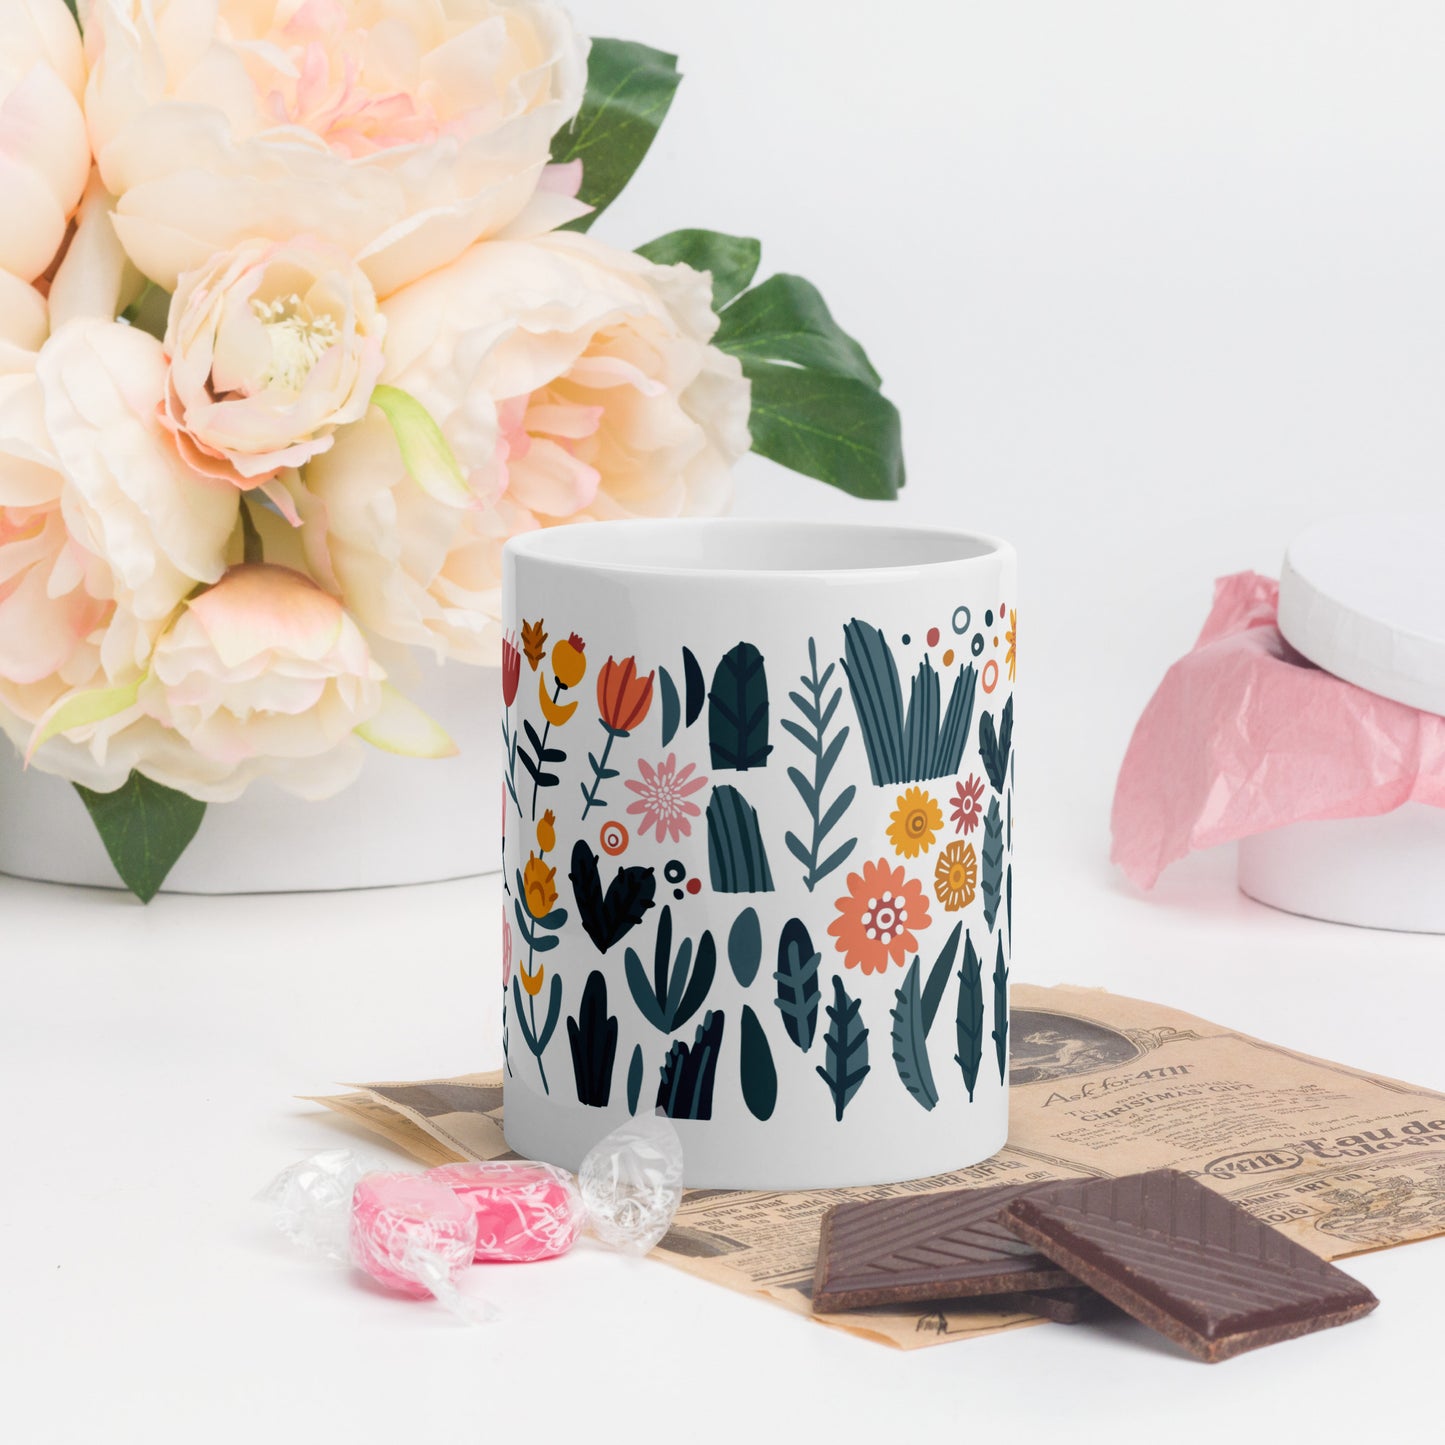 Flower power mug for coffee & tea's